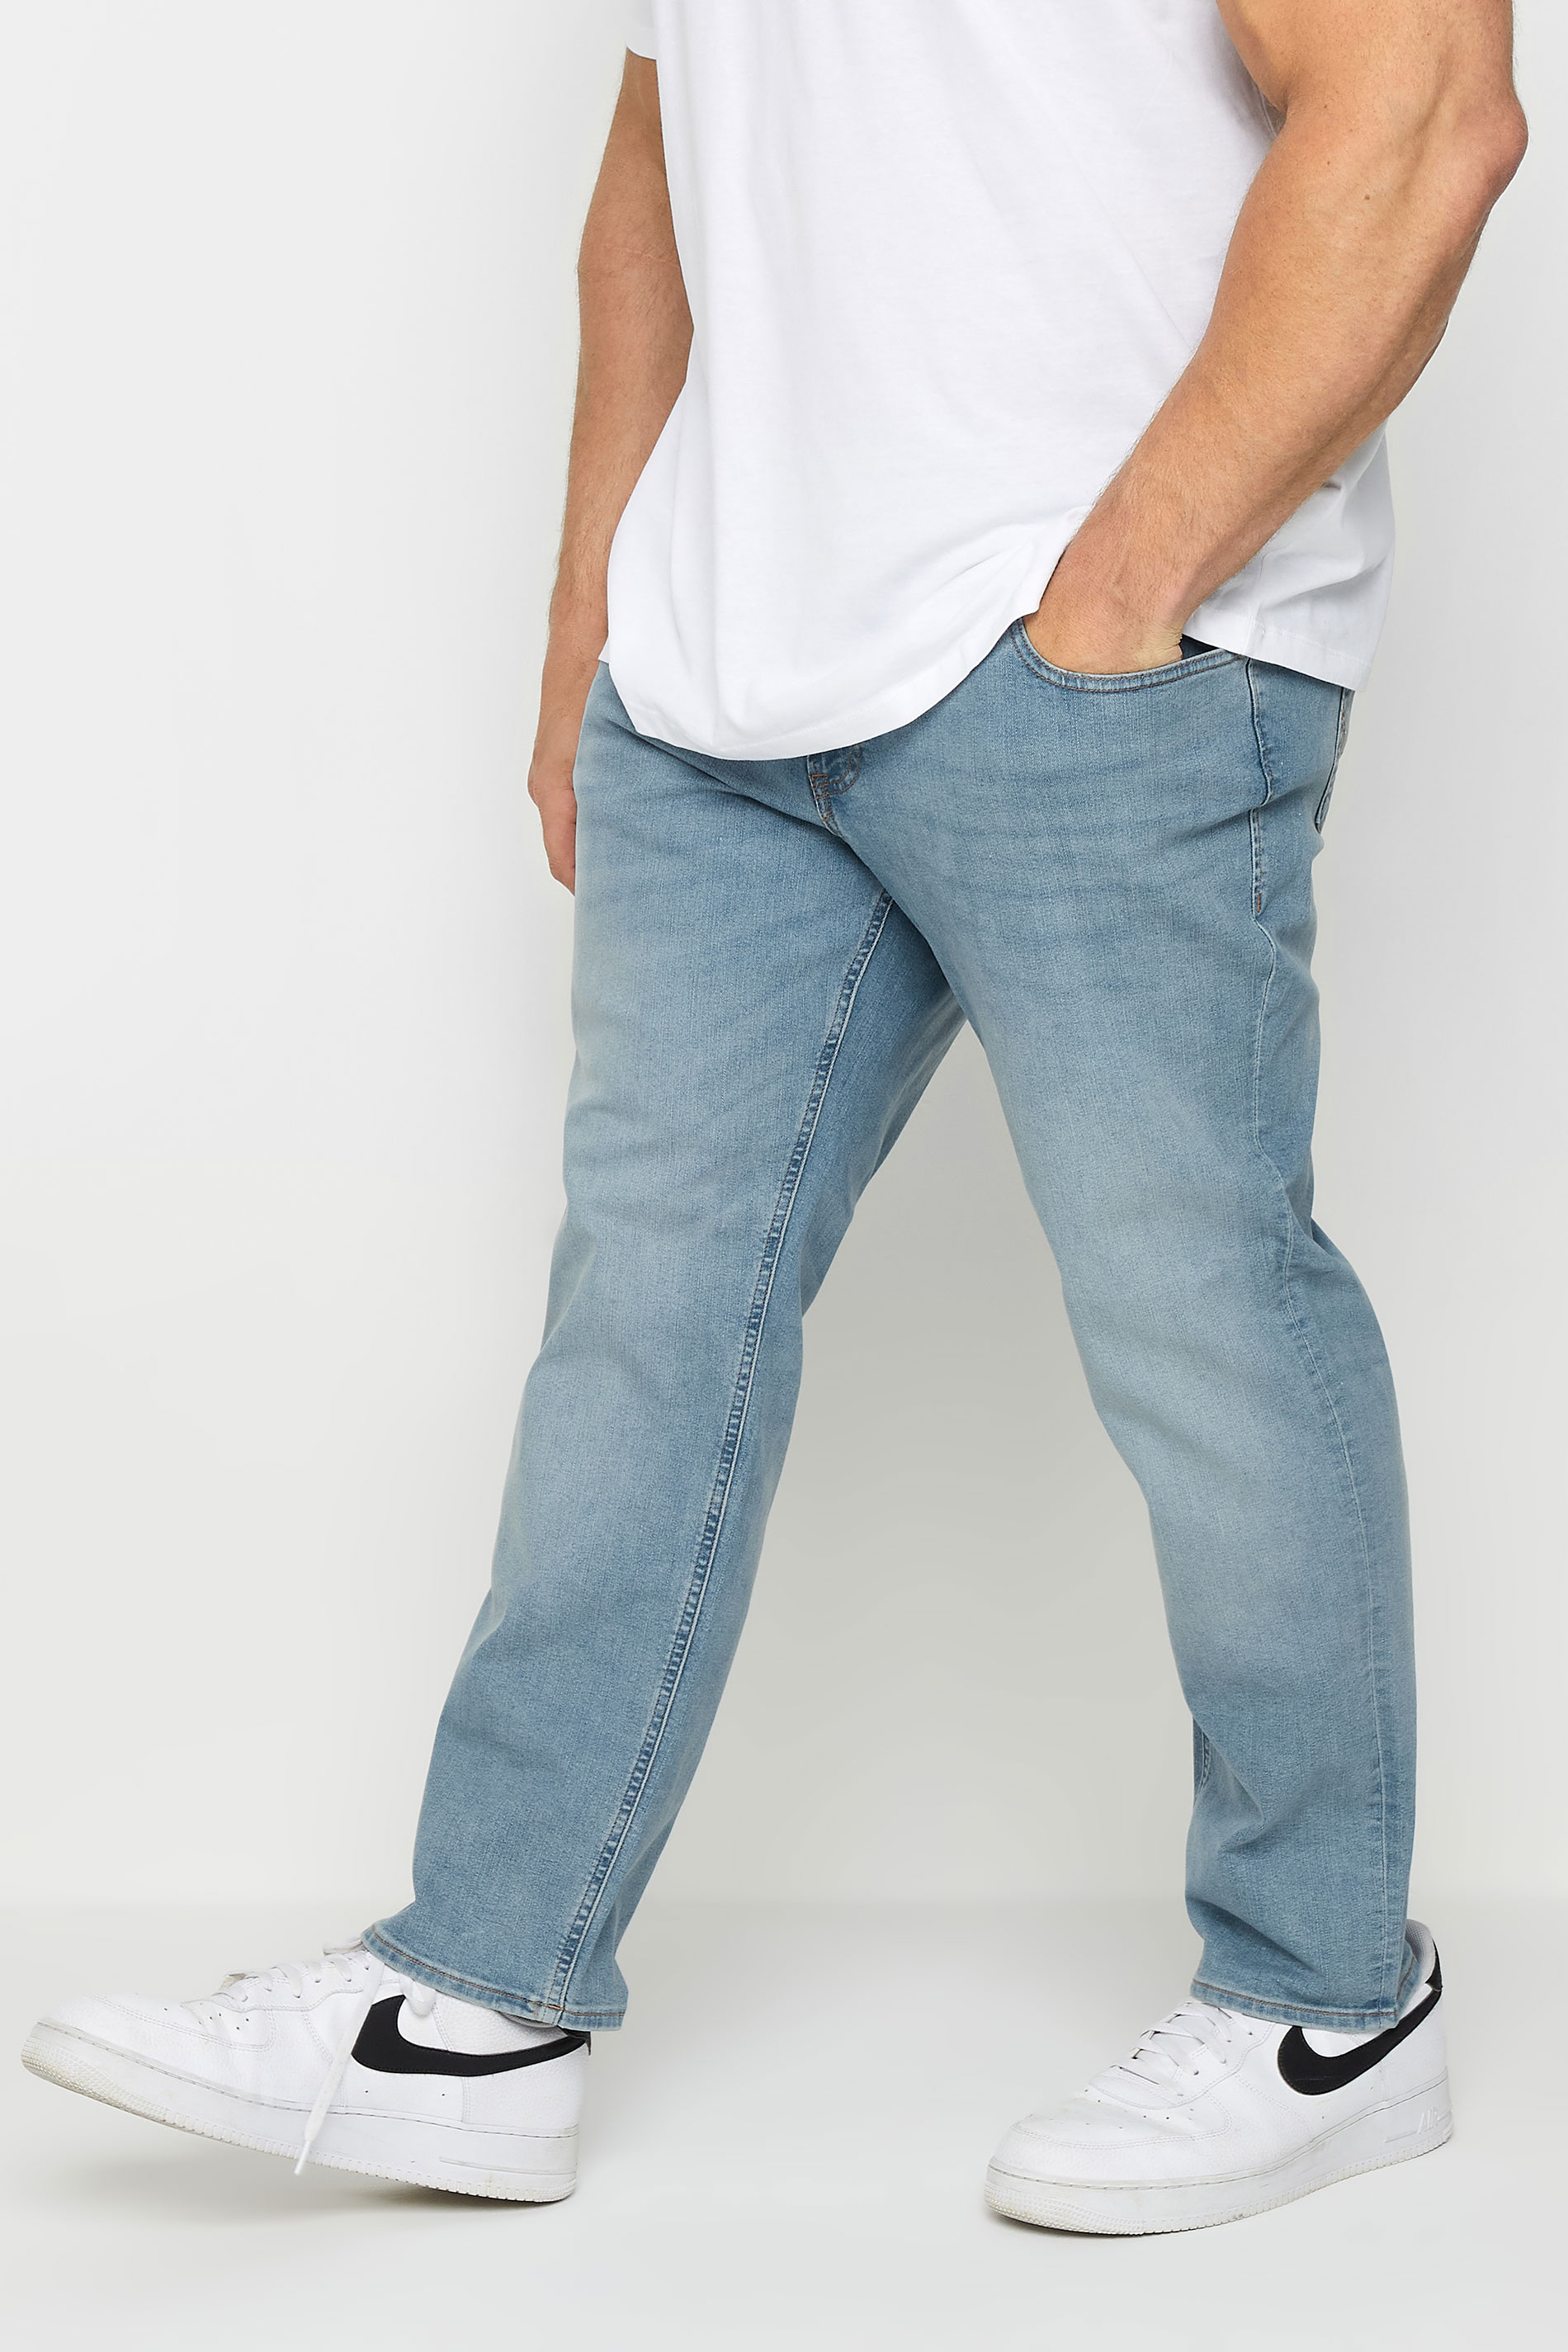 Image of Inside Leg Size 30", Waist Size 46 Mens Jack & Jones Big & Tall Blue Light Wash Mike Jeans Big & Tall